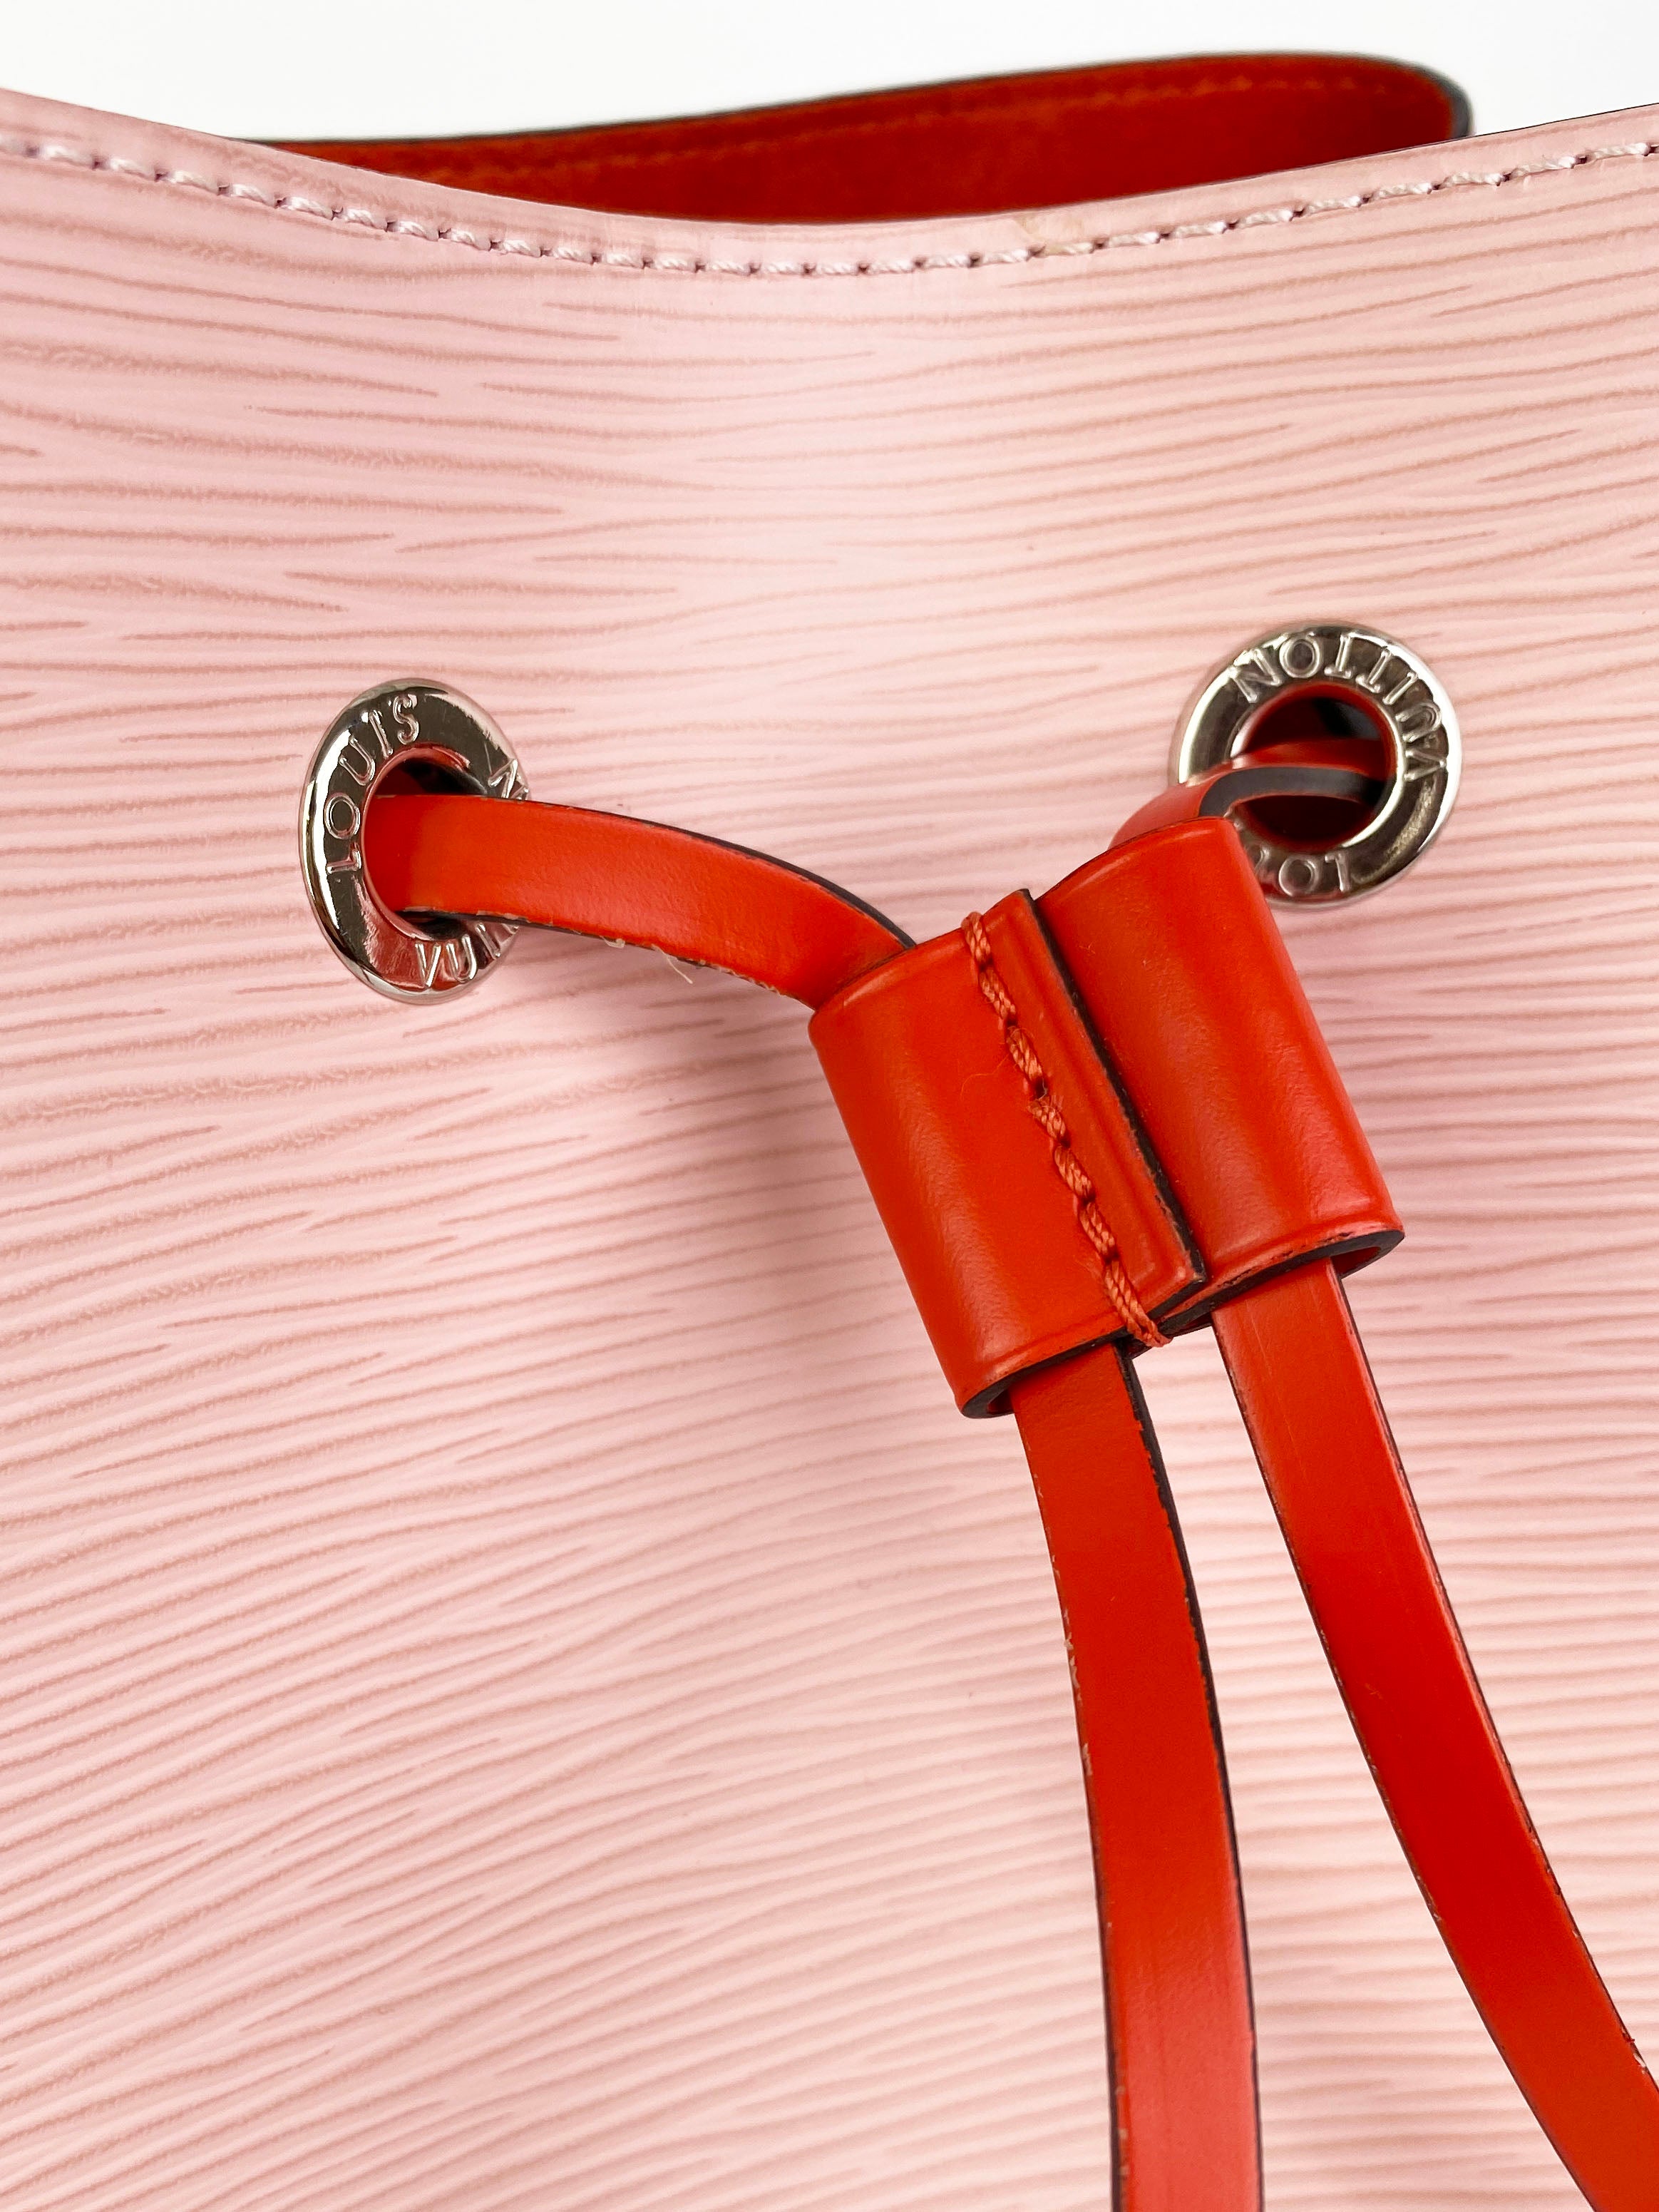 Louis Vuitton Rose Ballerine Epi NeoNoe Bag